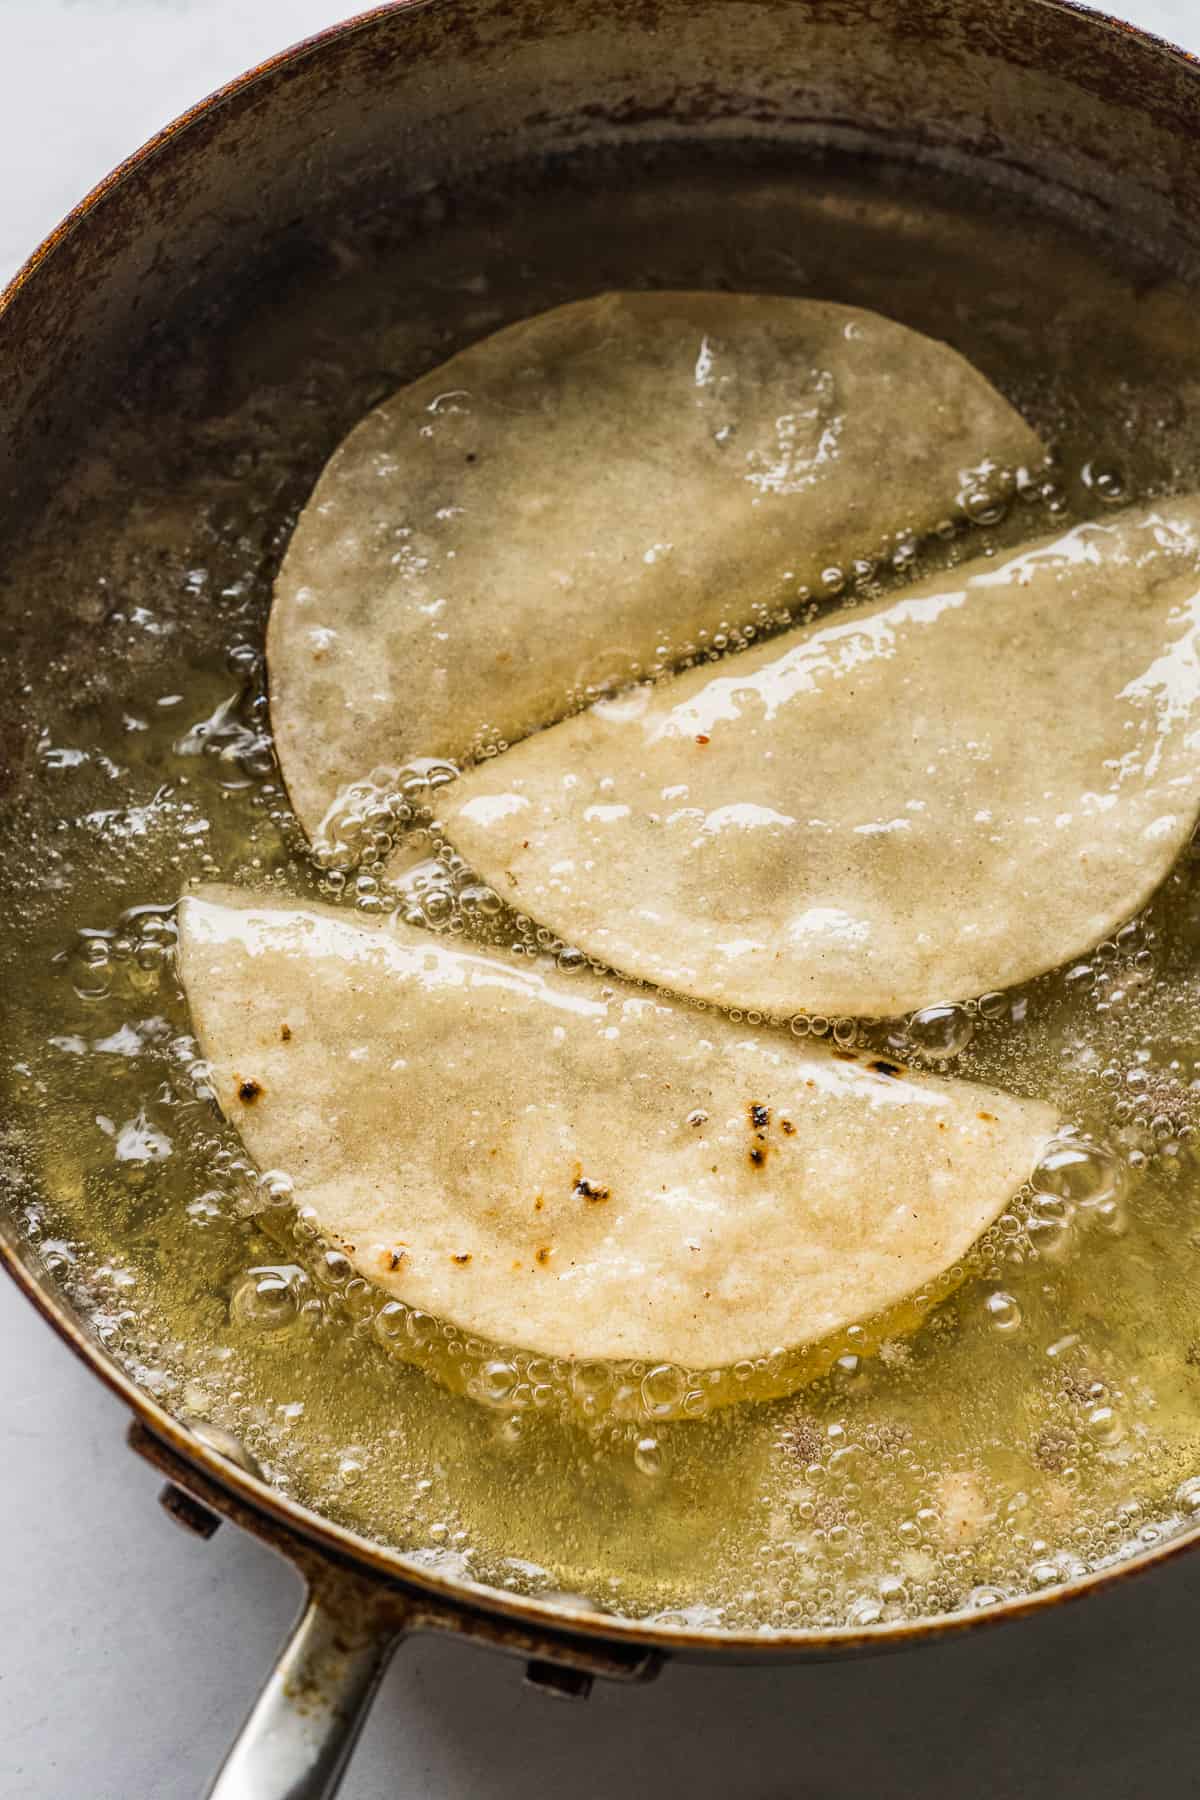 Tacos dorados frying in oil.